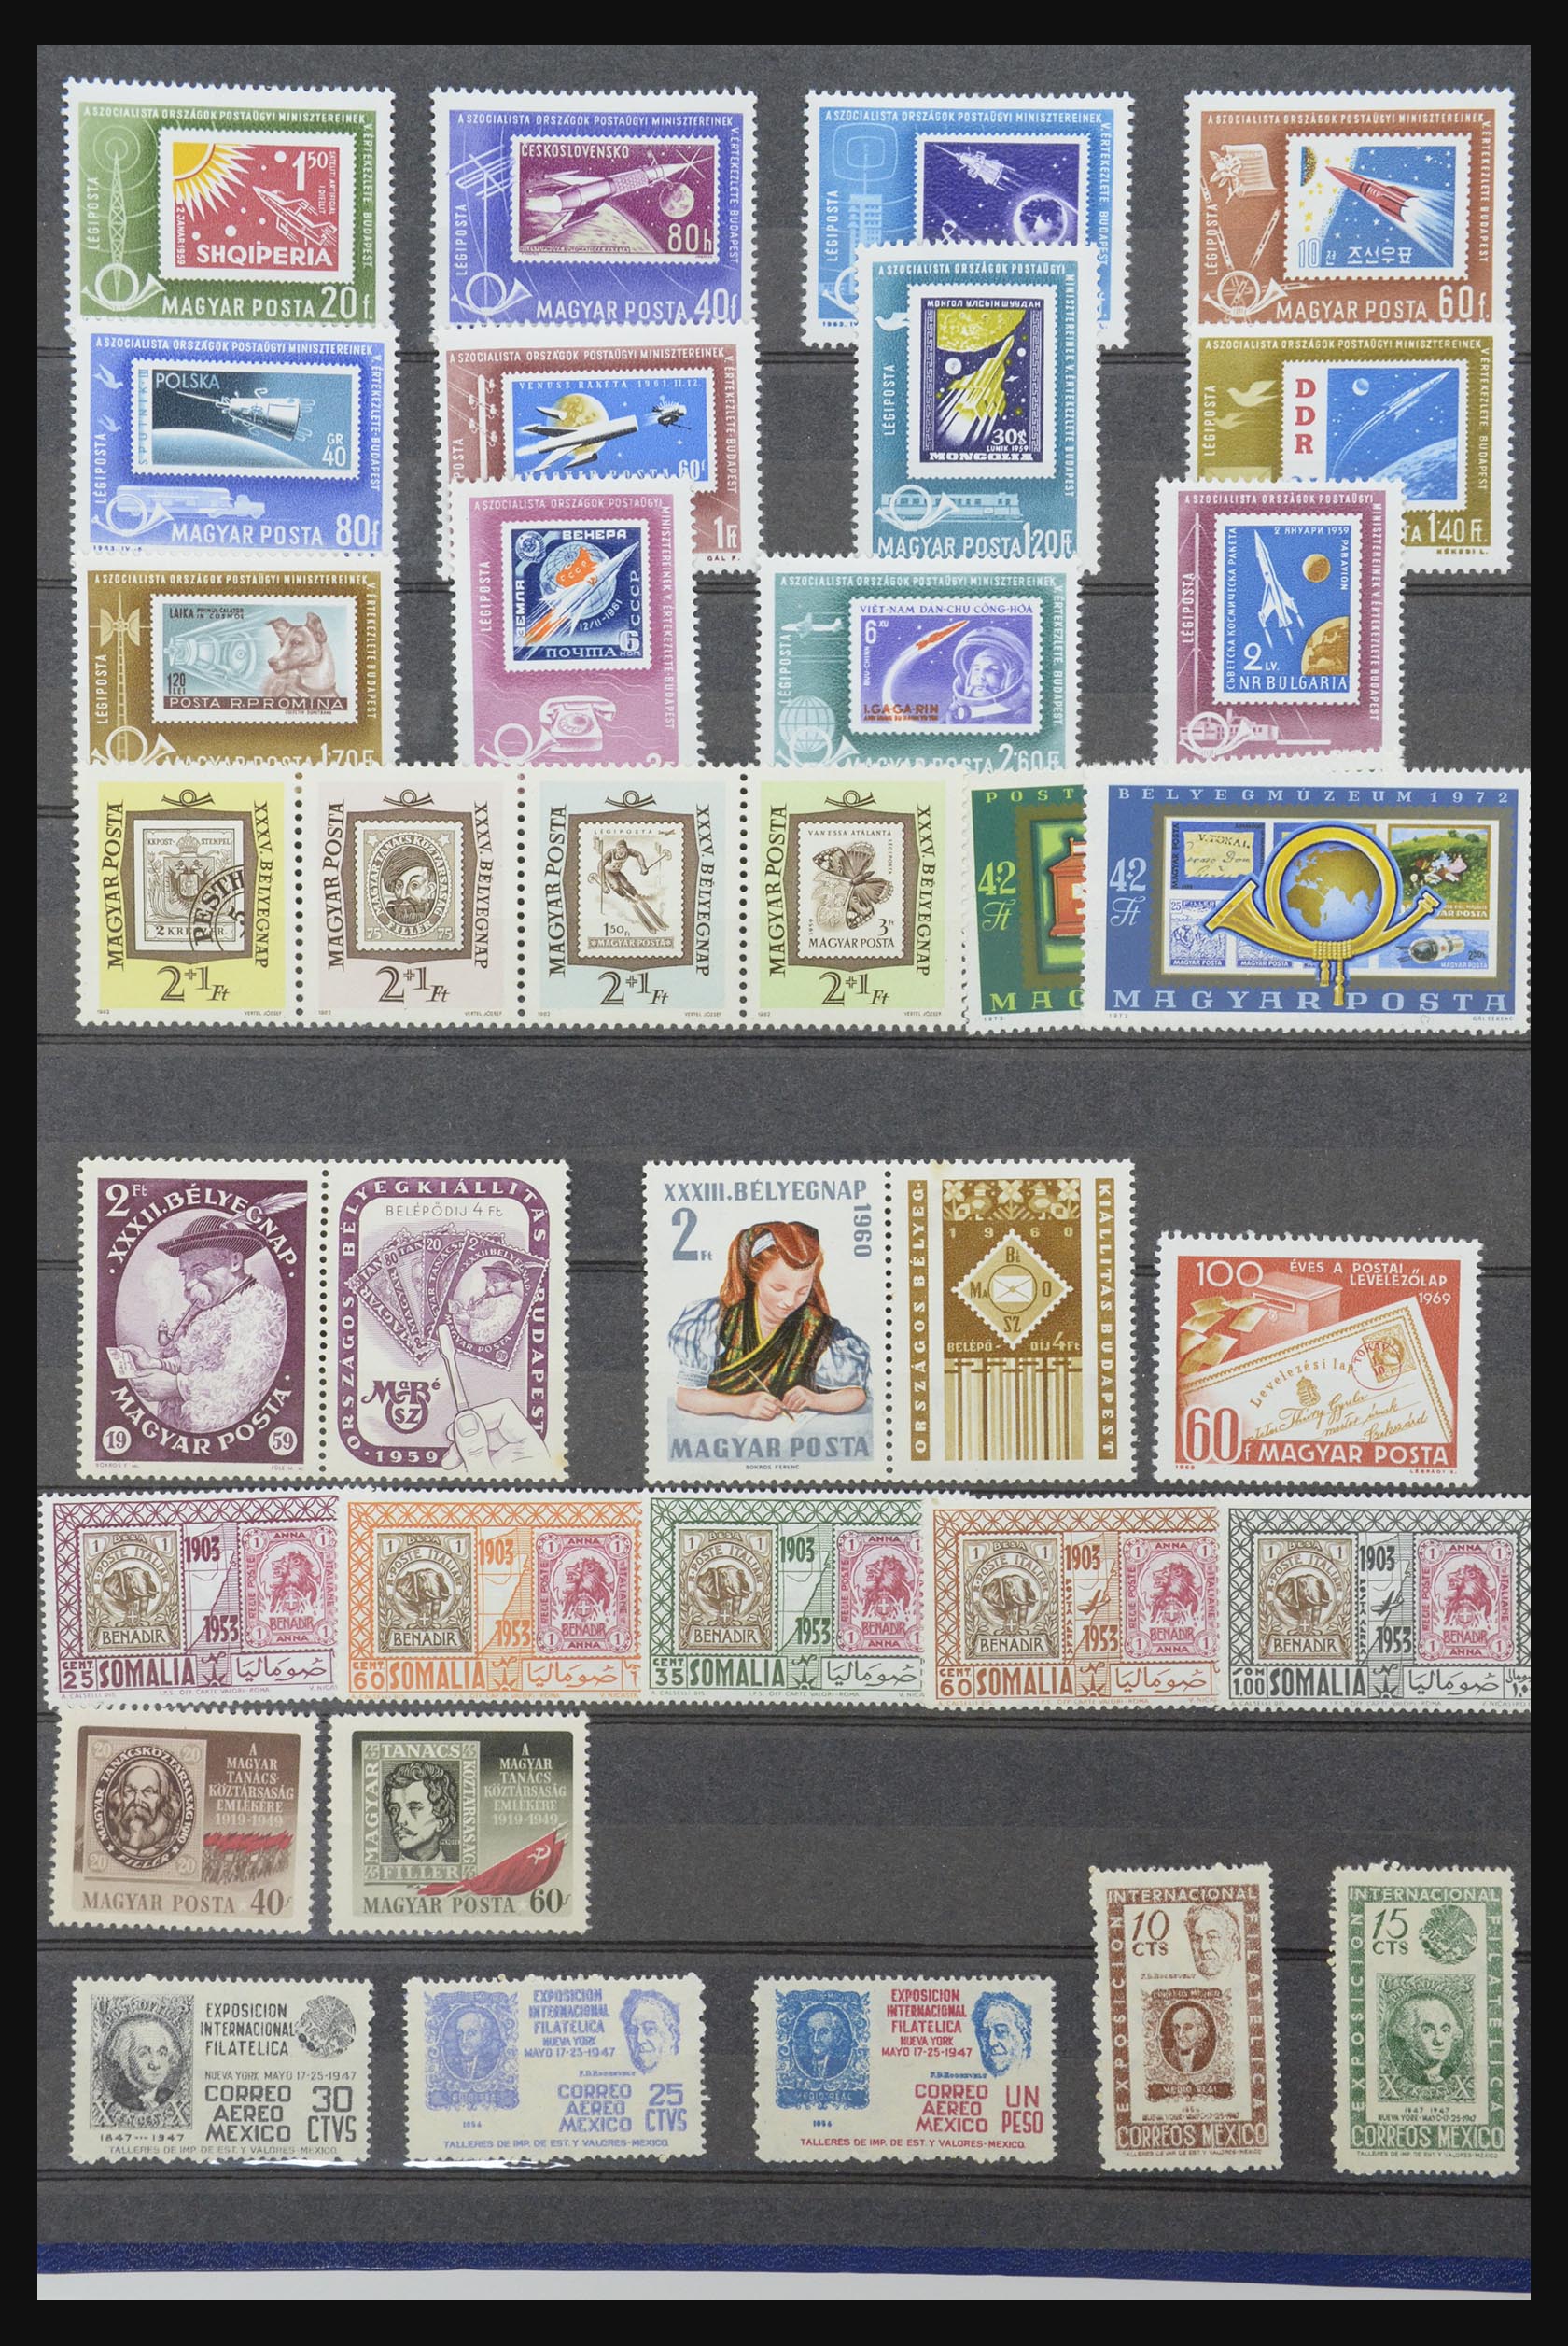 31652 051 - 31652 Motief: postzegel op postzegel 1940-1993.